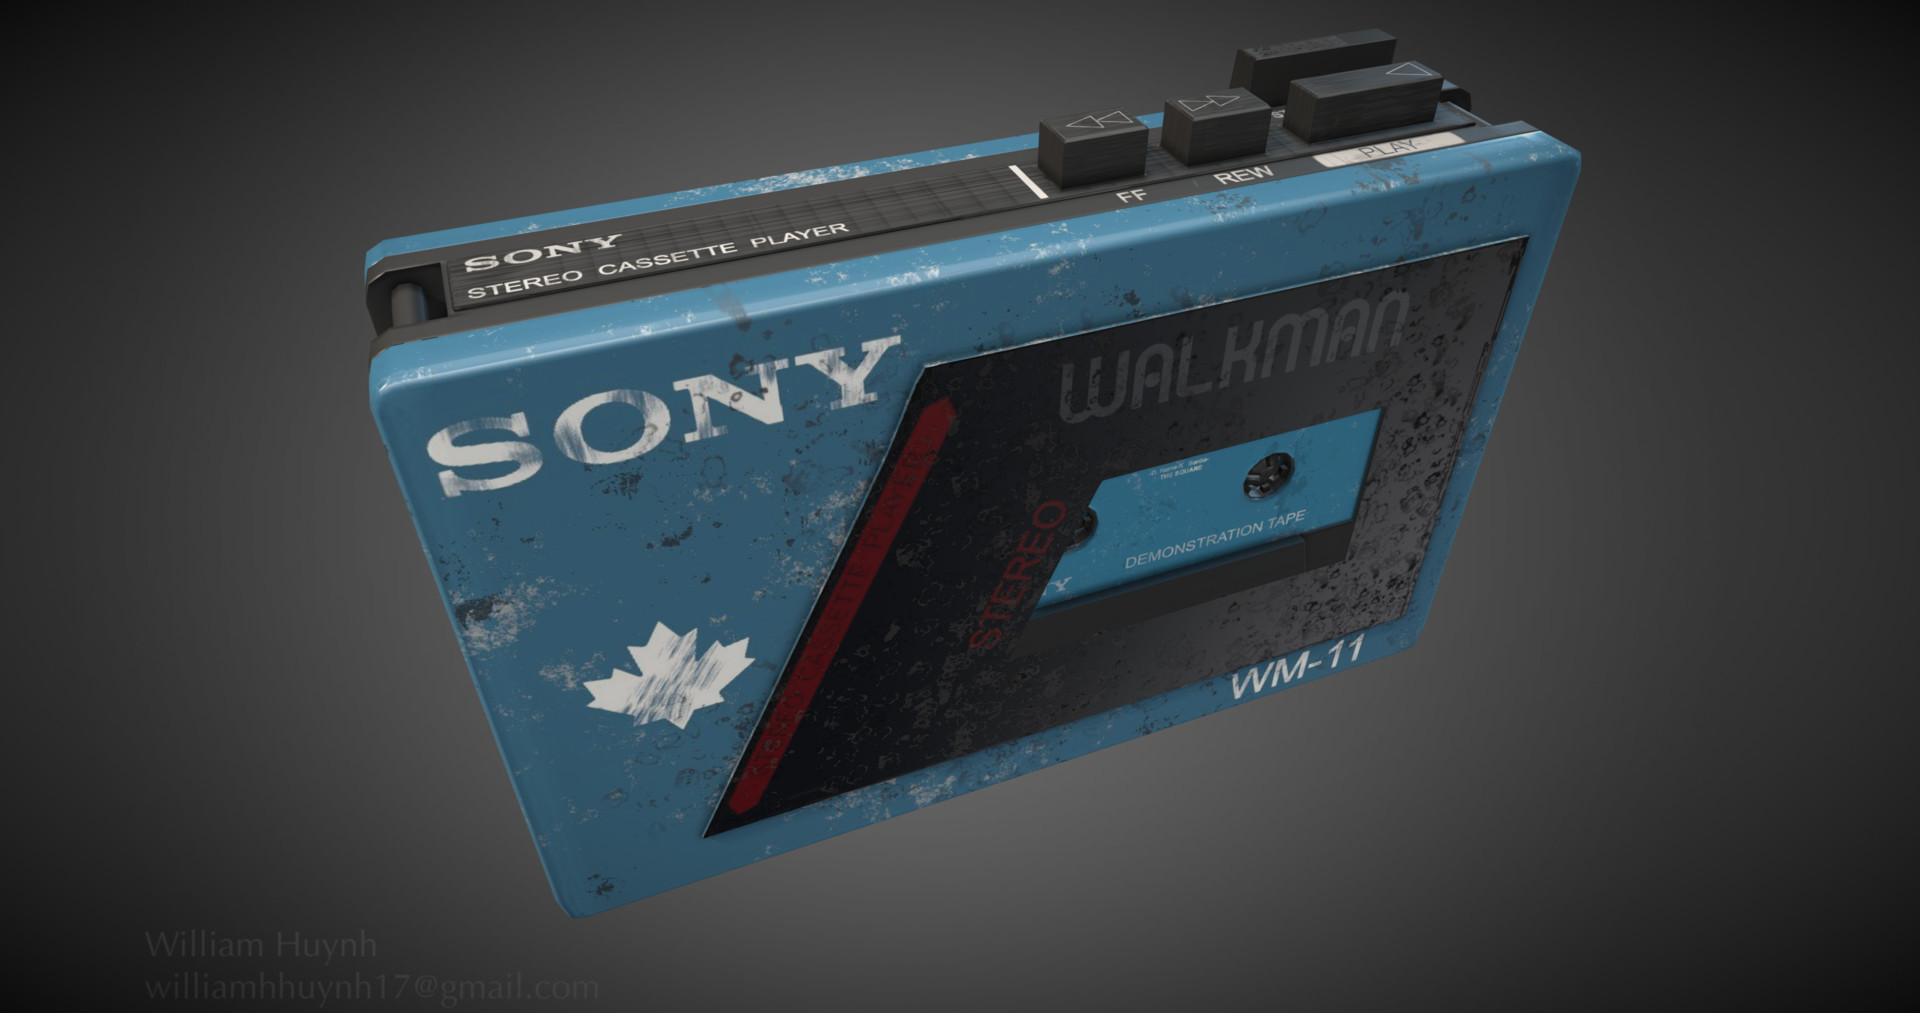 ArtStation - Walkman Cassette Tape Player